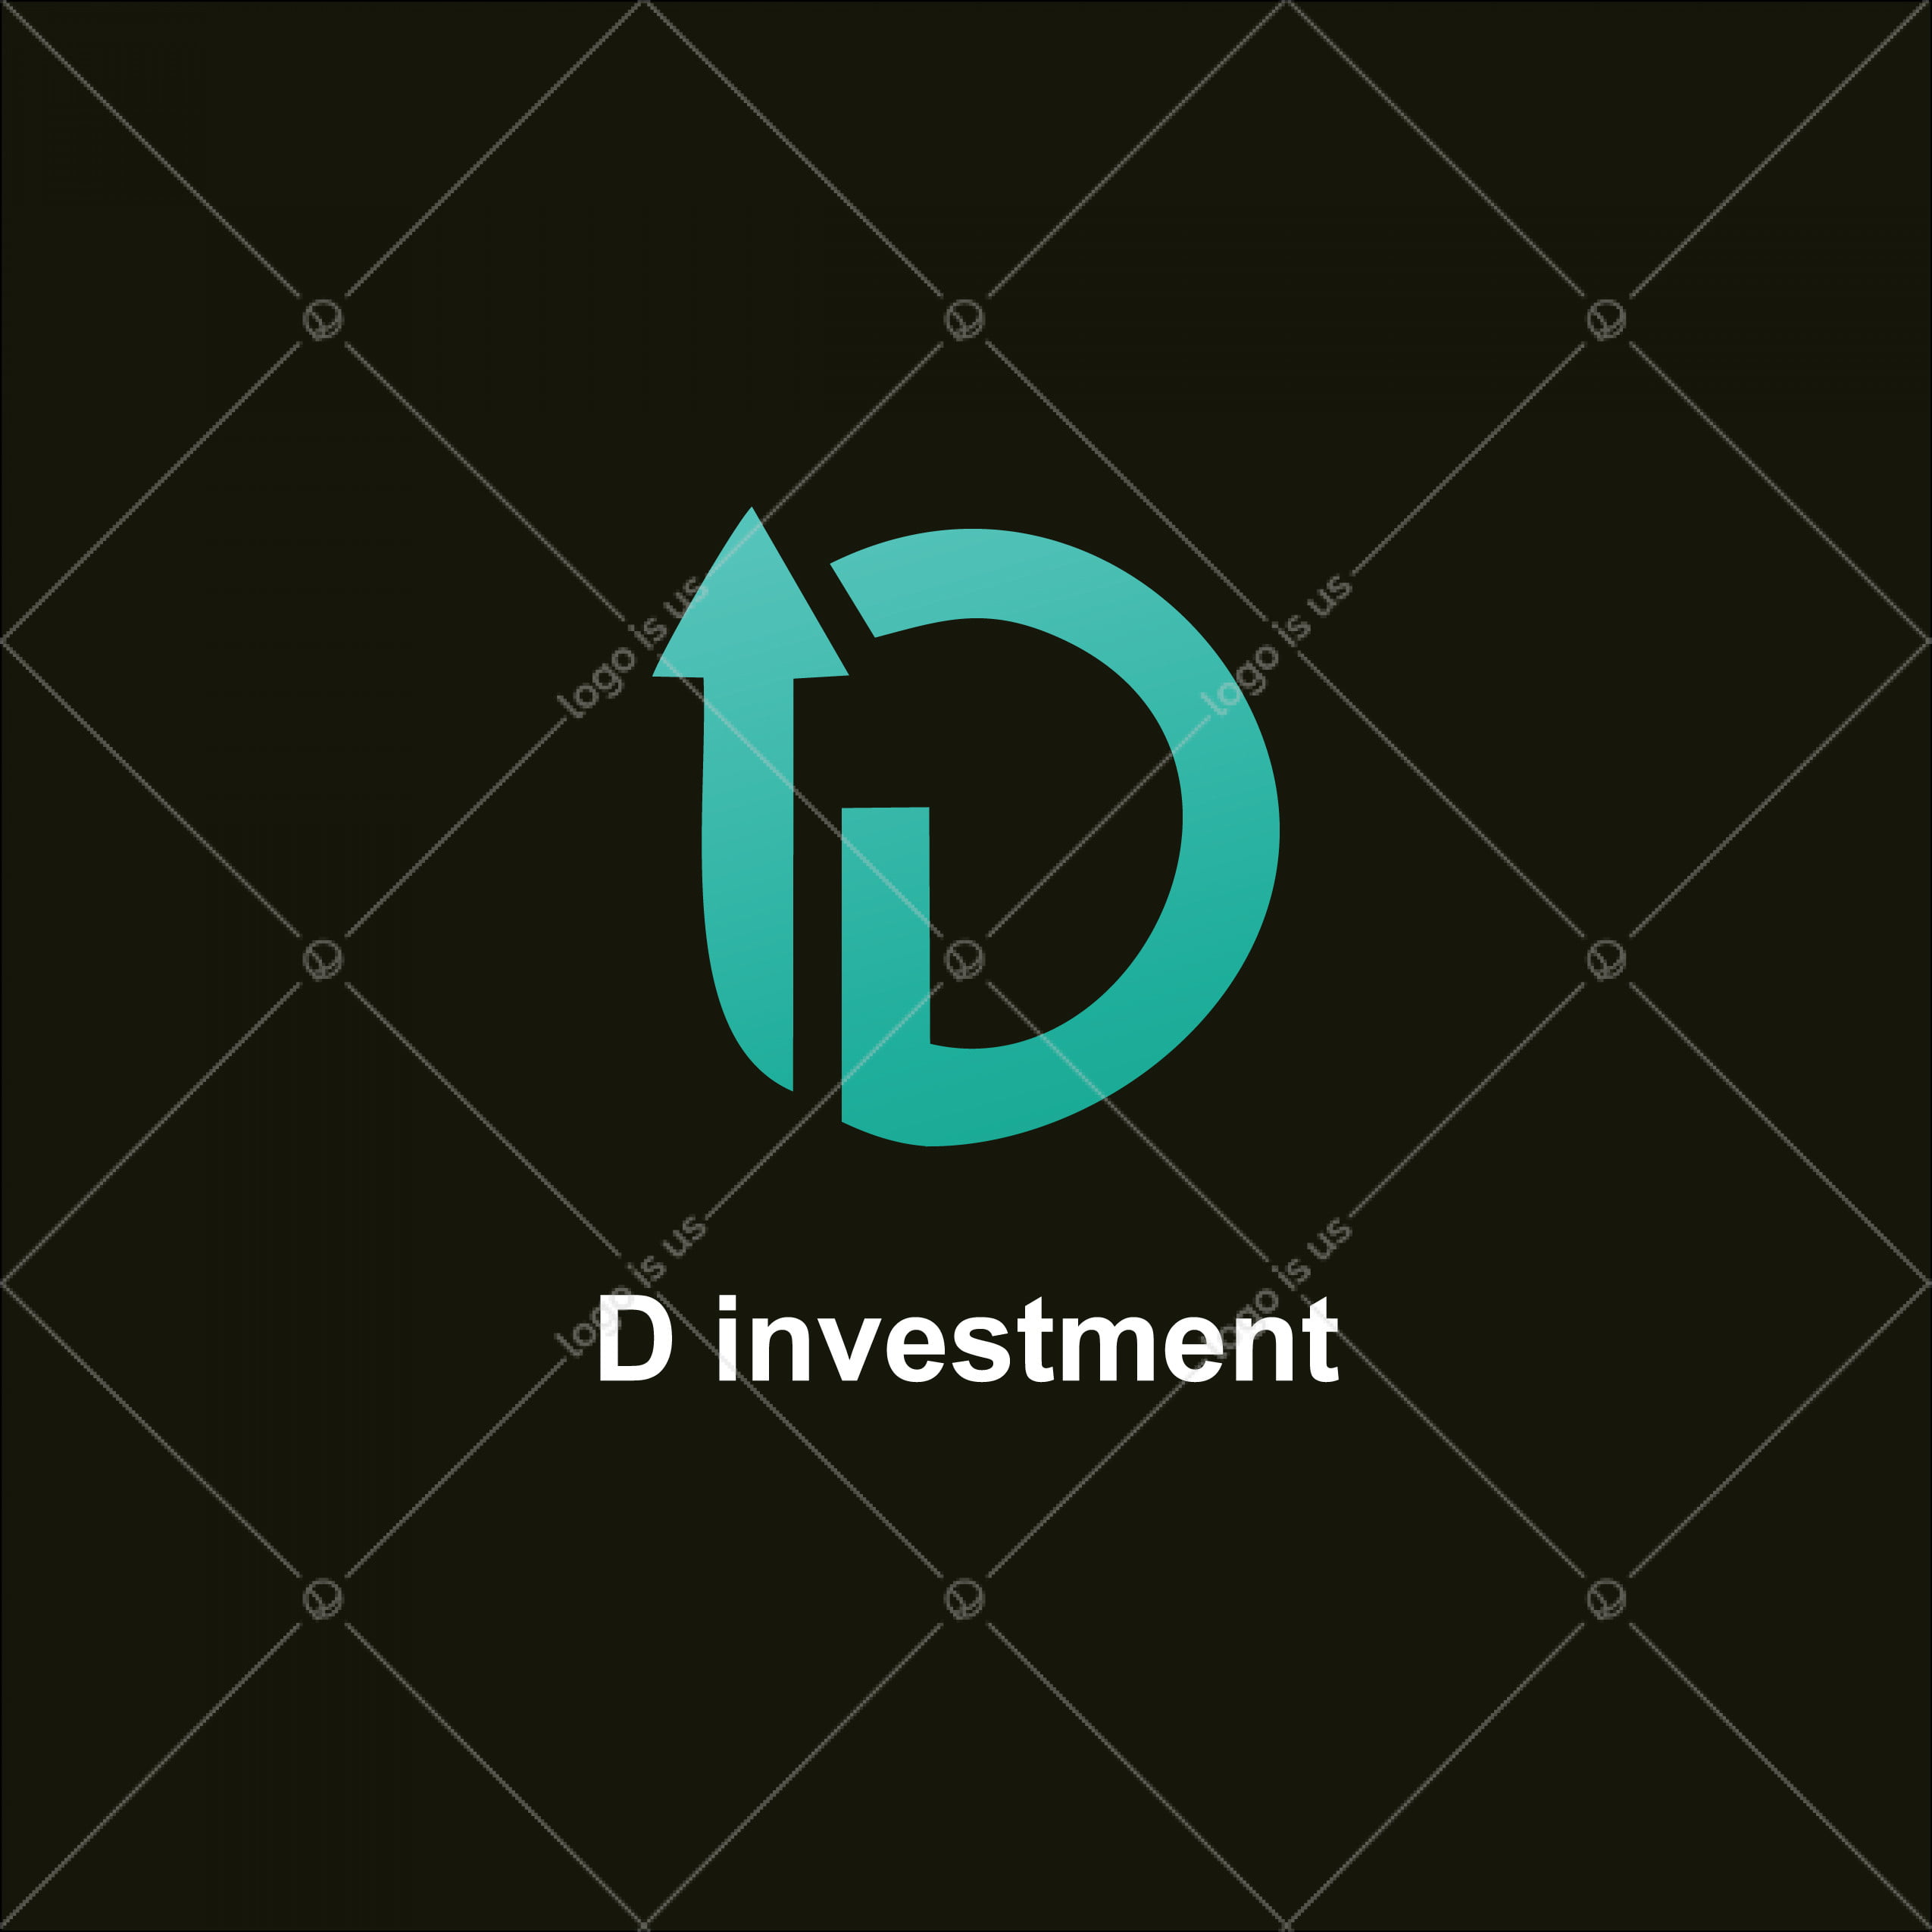 D Investment Logo